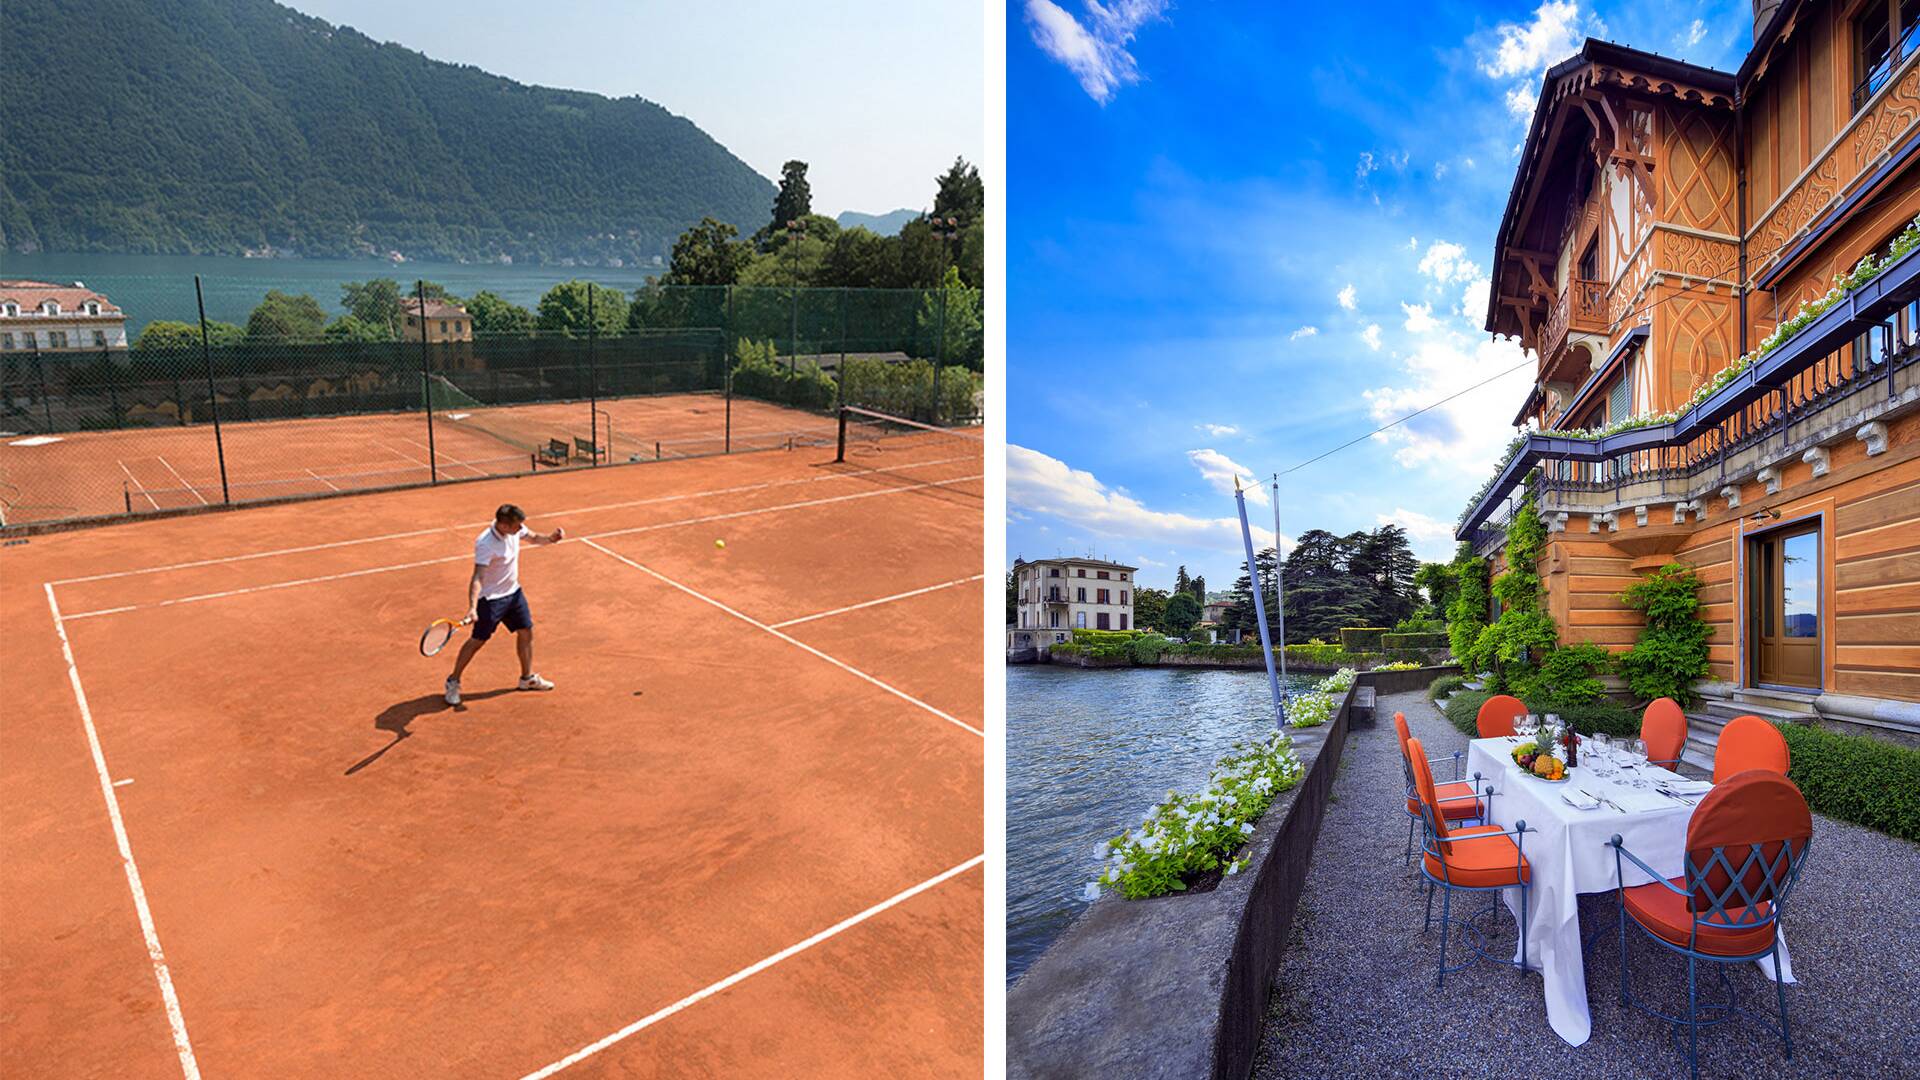 Villa d'Este, hotel, tennis court